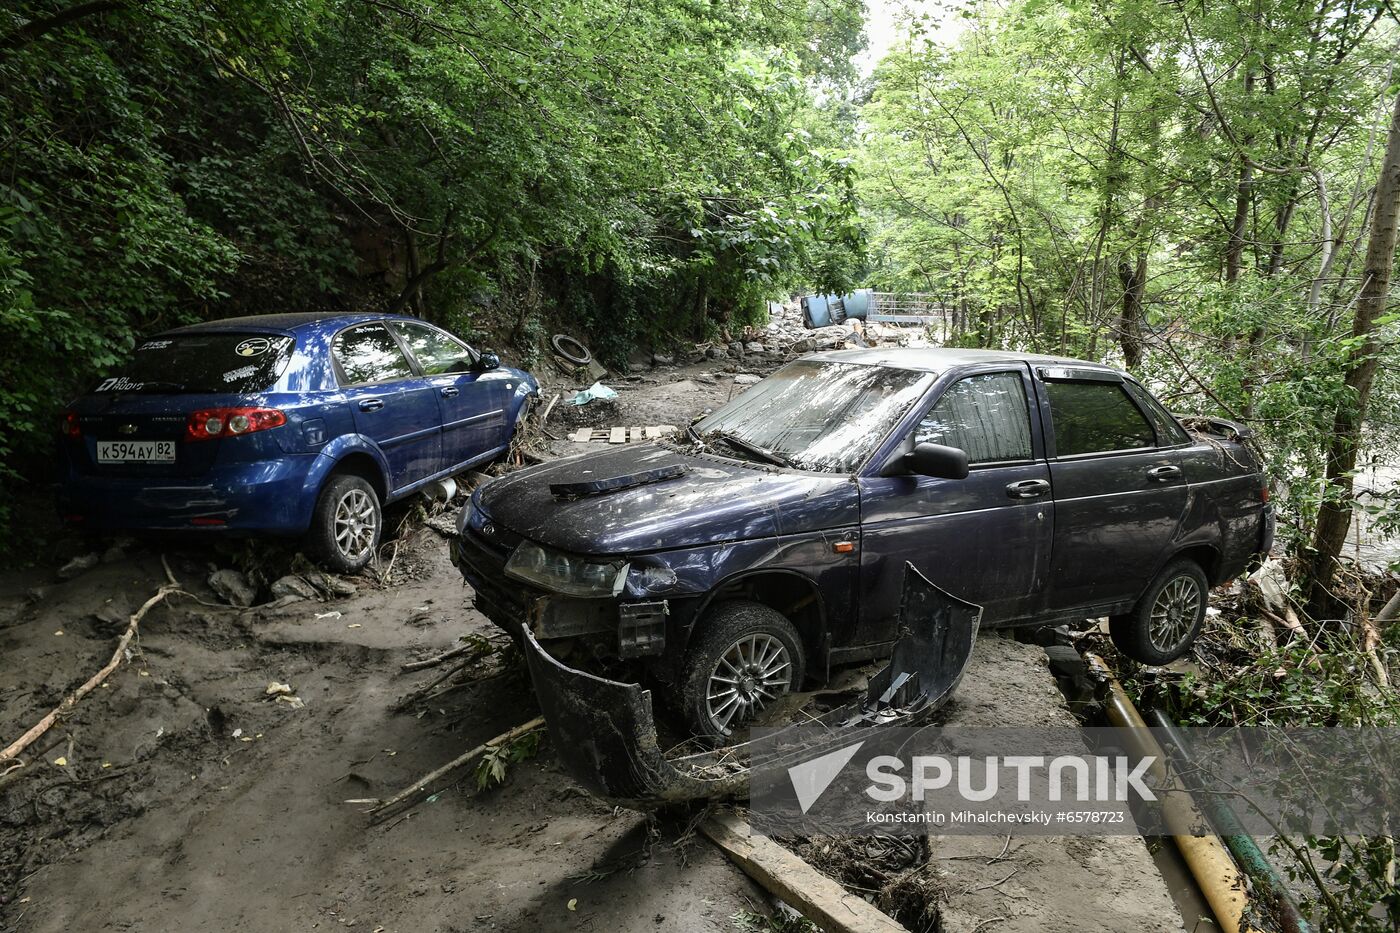 Russia Heavy Rains Aftermath